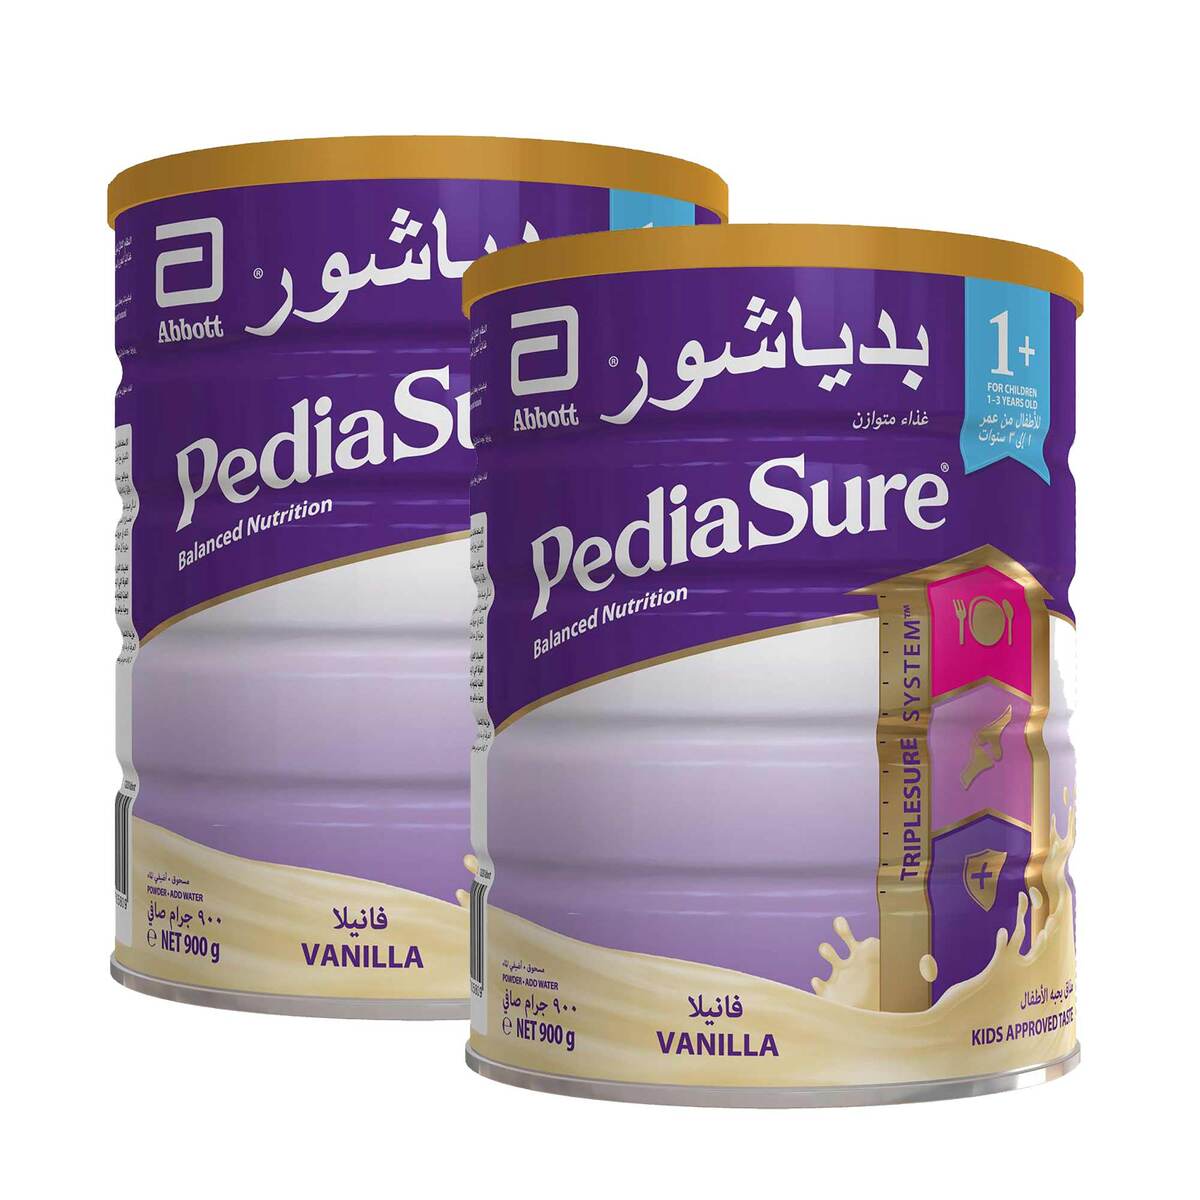 Pediasure Complete And Balanced Nutrition Vanilla Powder  1 +  1-3 Years  2 x 900g